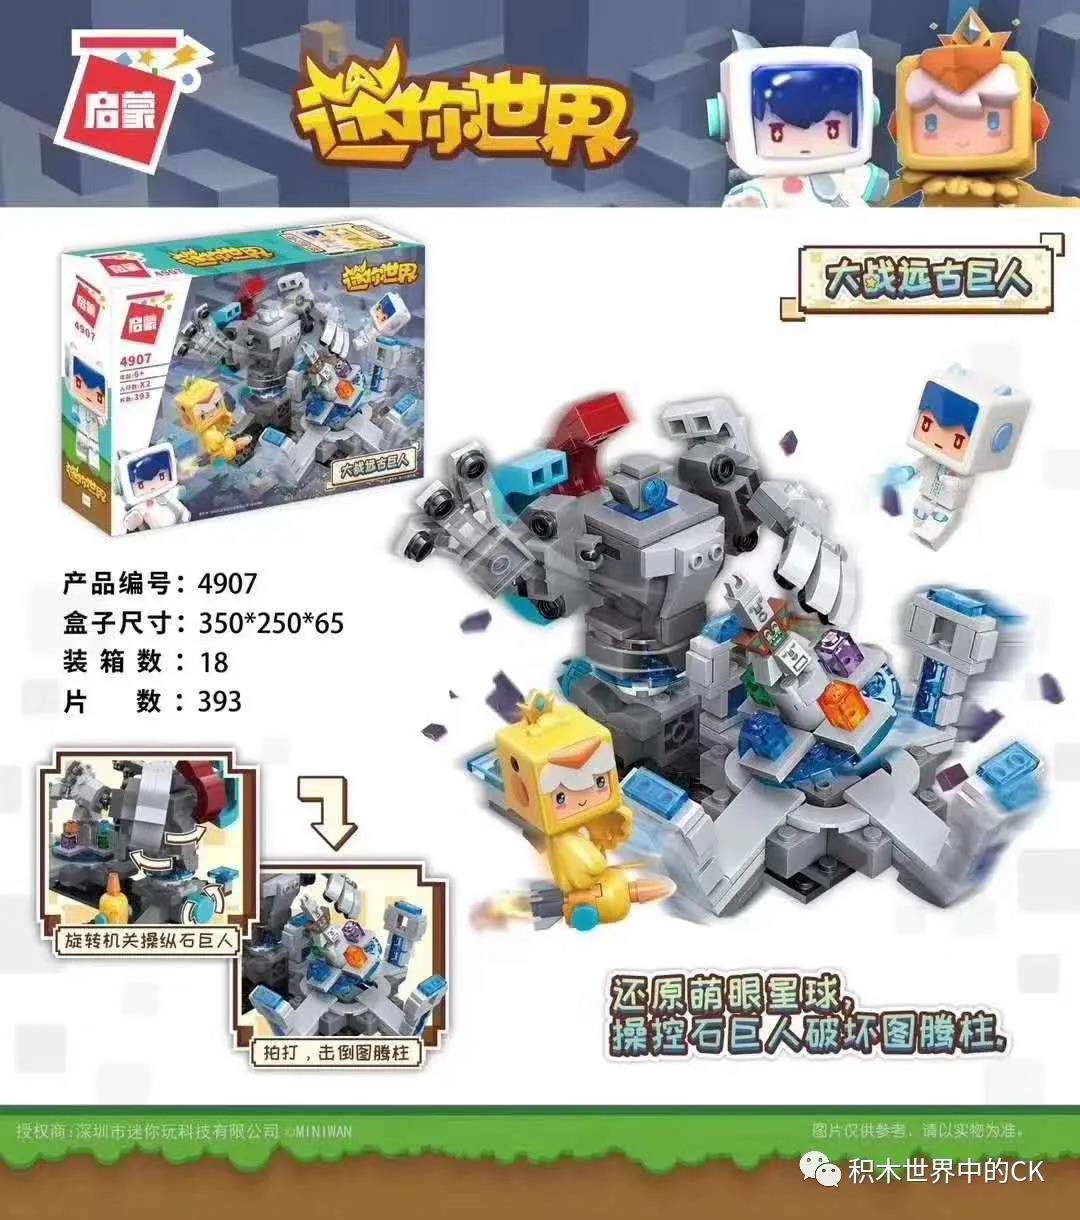 Pokemon Mewtwo Qman Building Blocks Toy Set